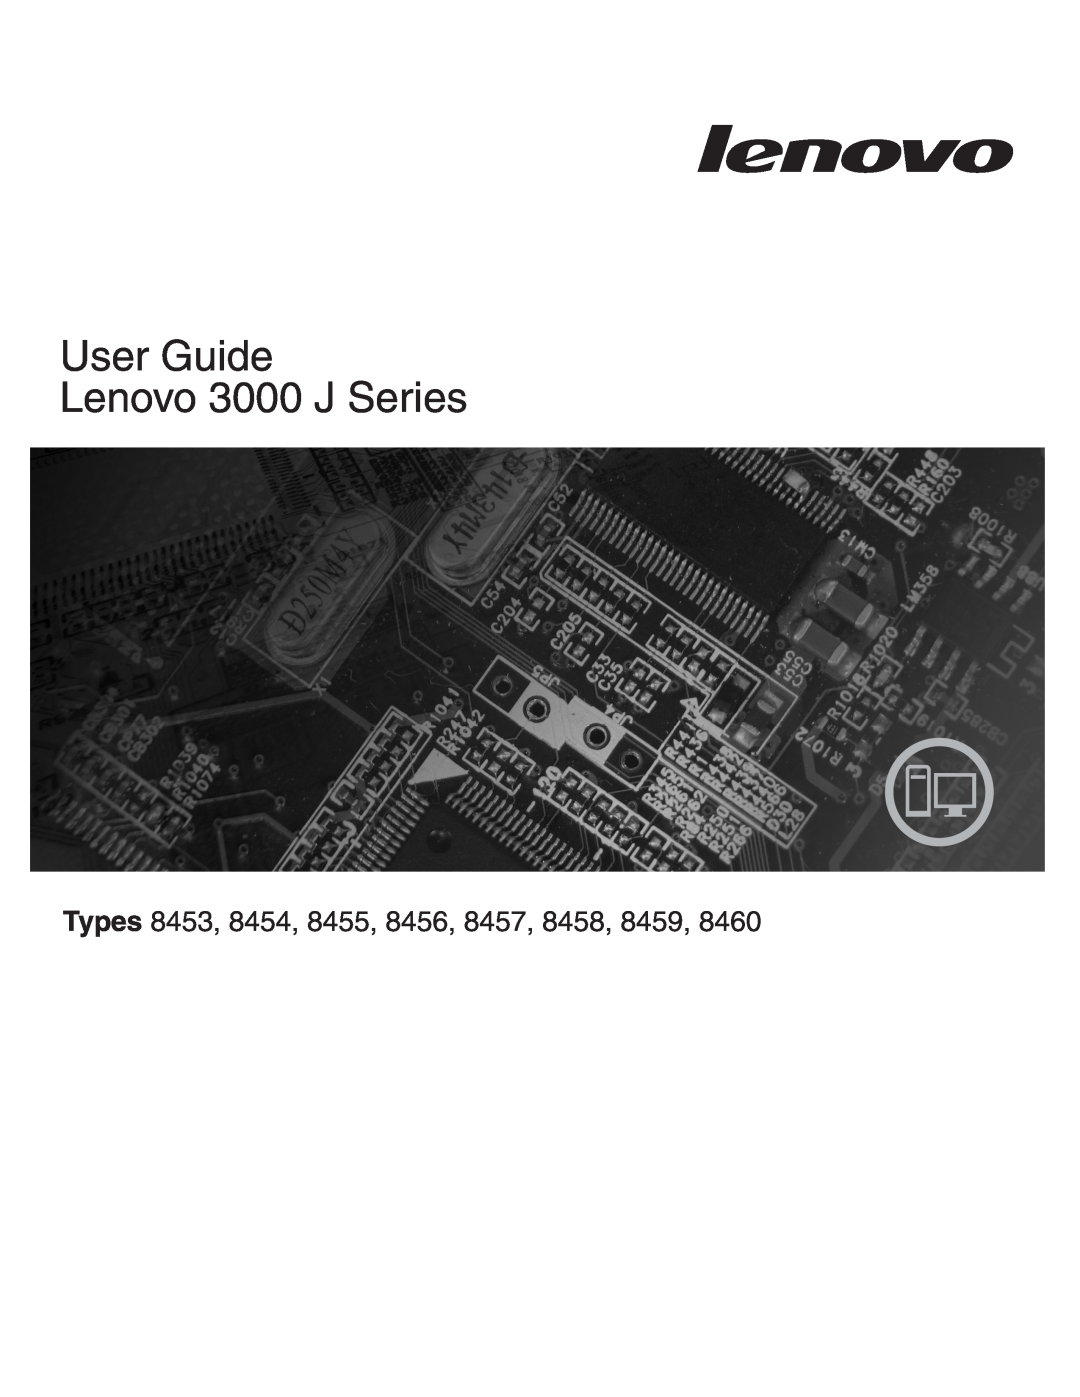 Lenovo 8459, 8460 manual User Guide Lenovo 3000 J Series, Types 8453, 8454, 8455, 8456, 8457, 8458 